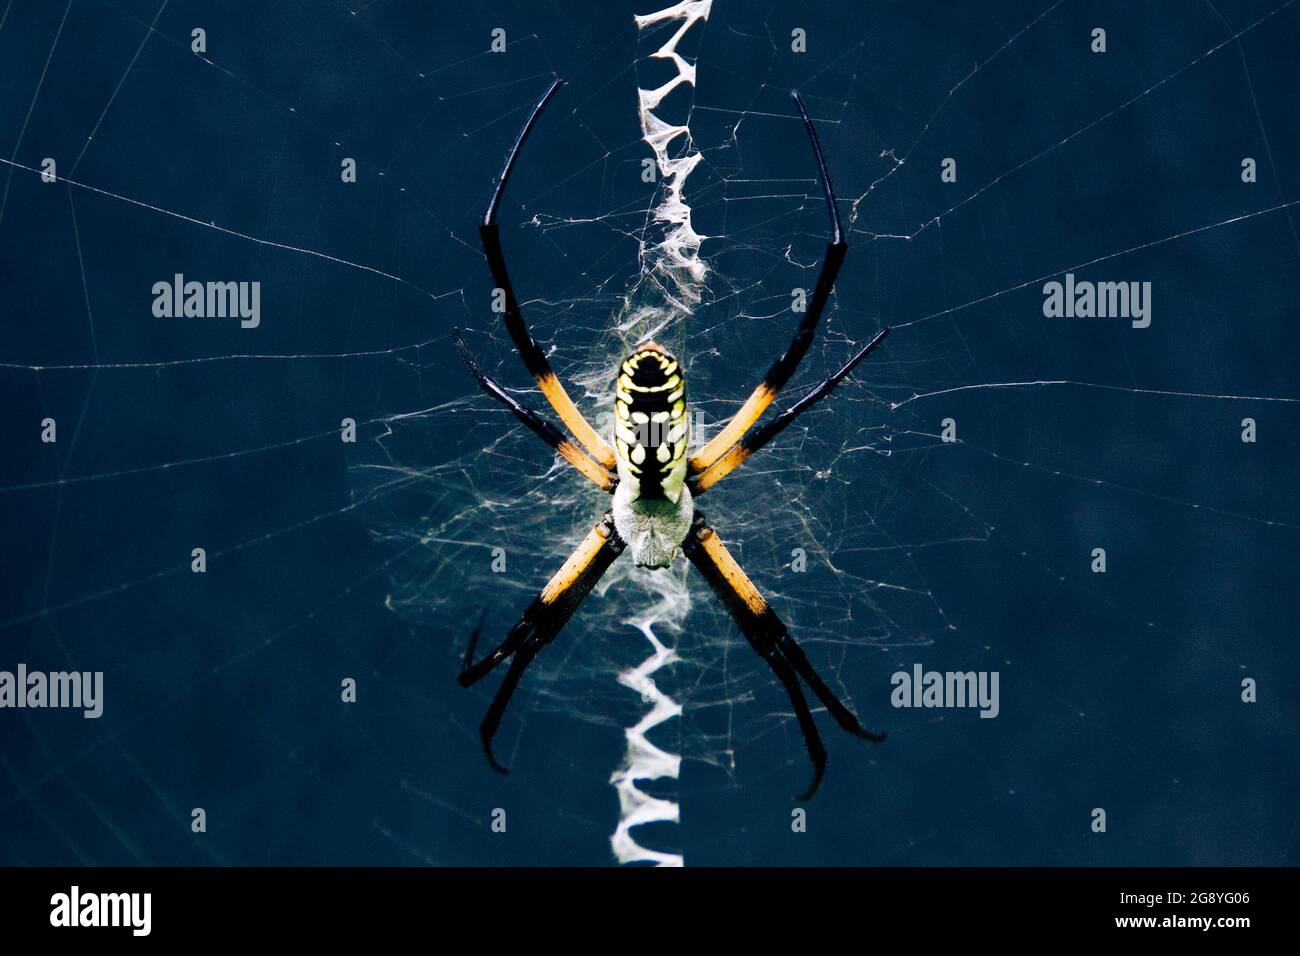 Black and yellow garden spider in zig zag web against a dark background Stock Photo